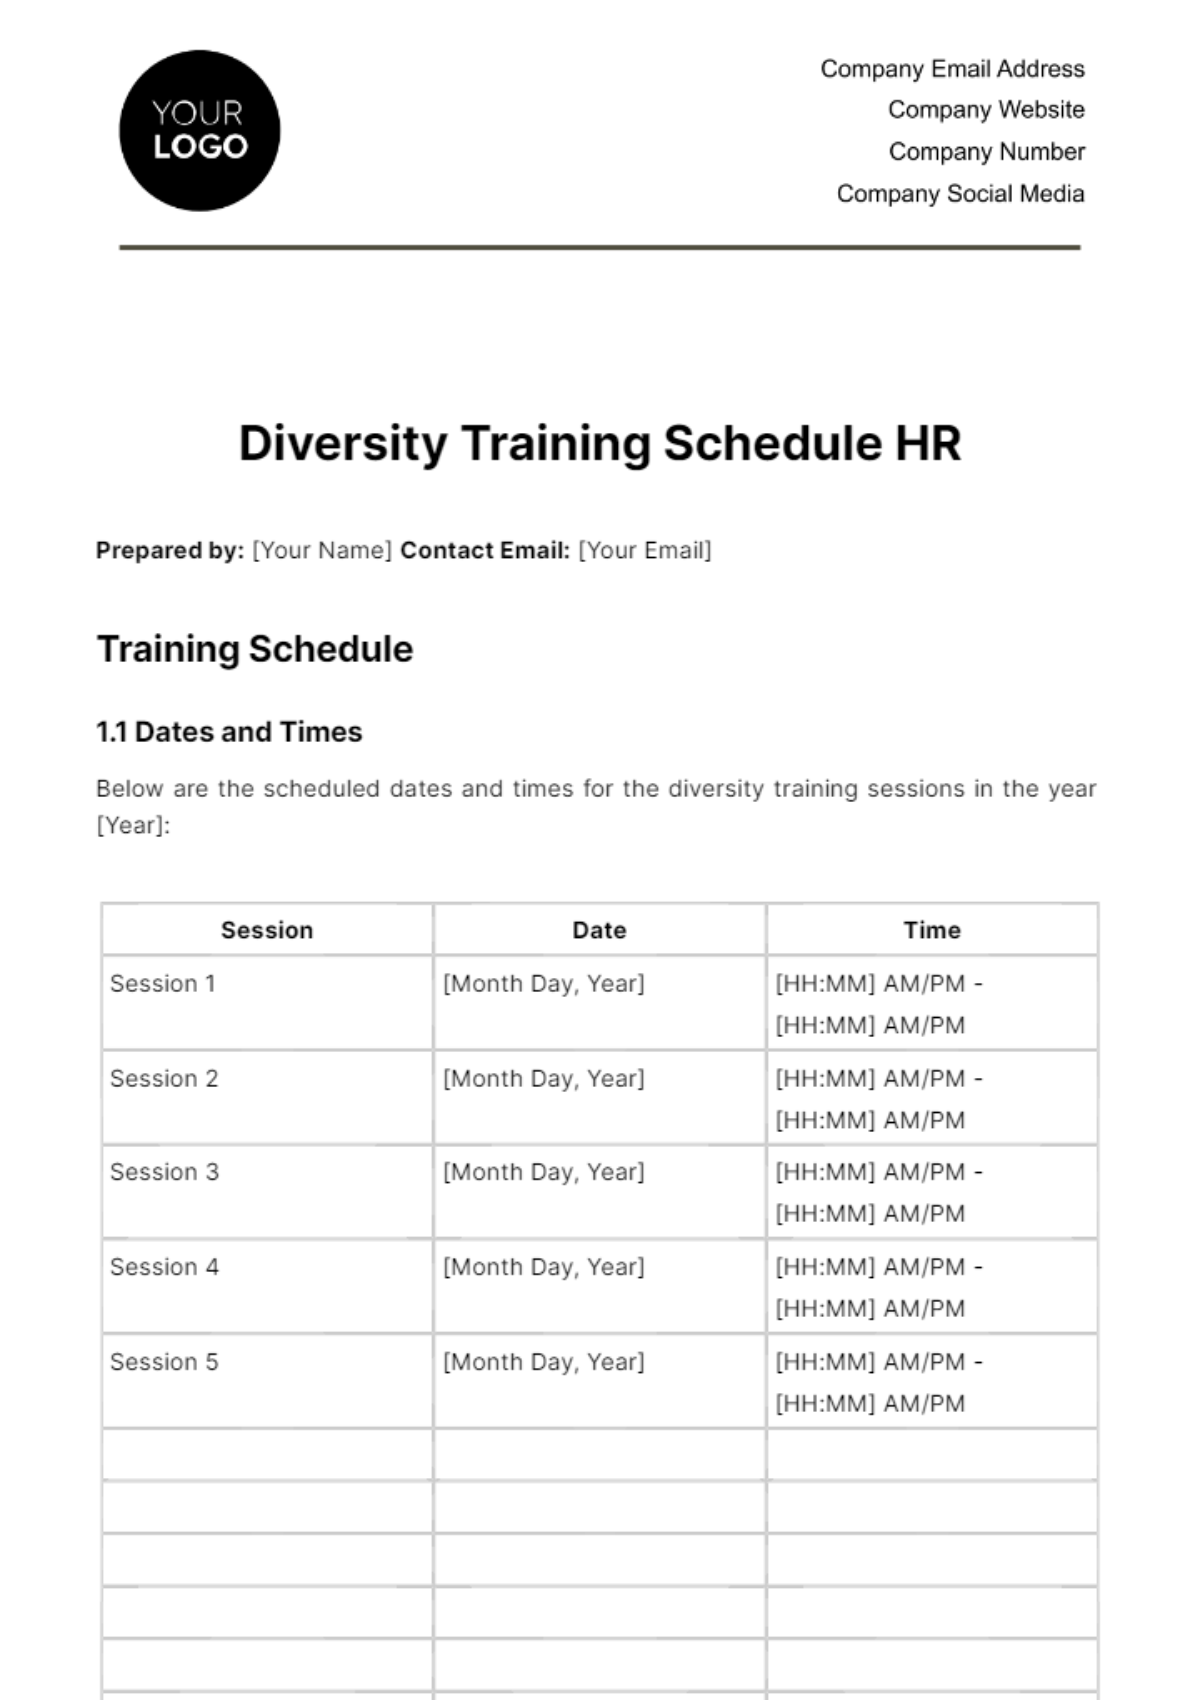 Free Diversity Training Schedule HR Template